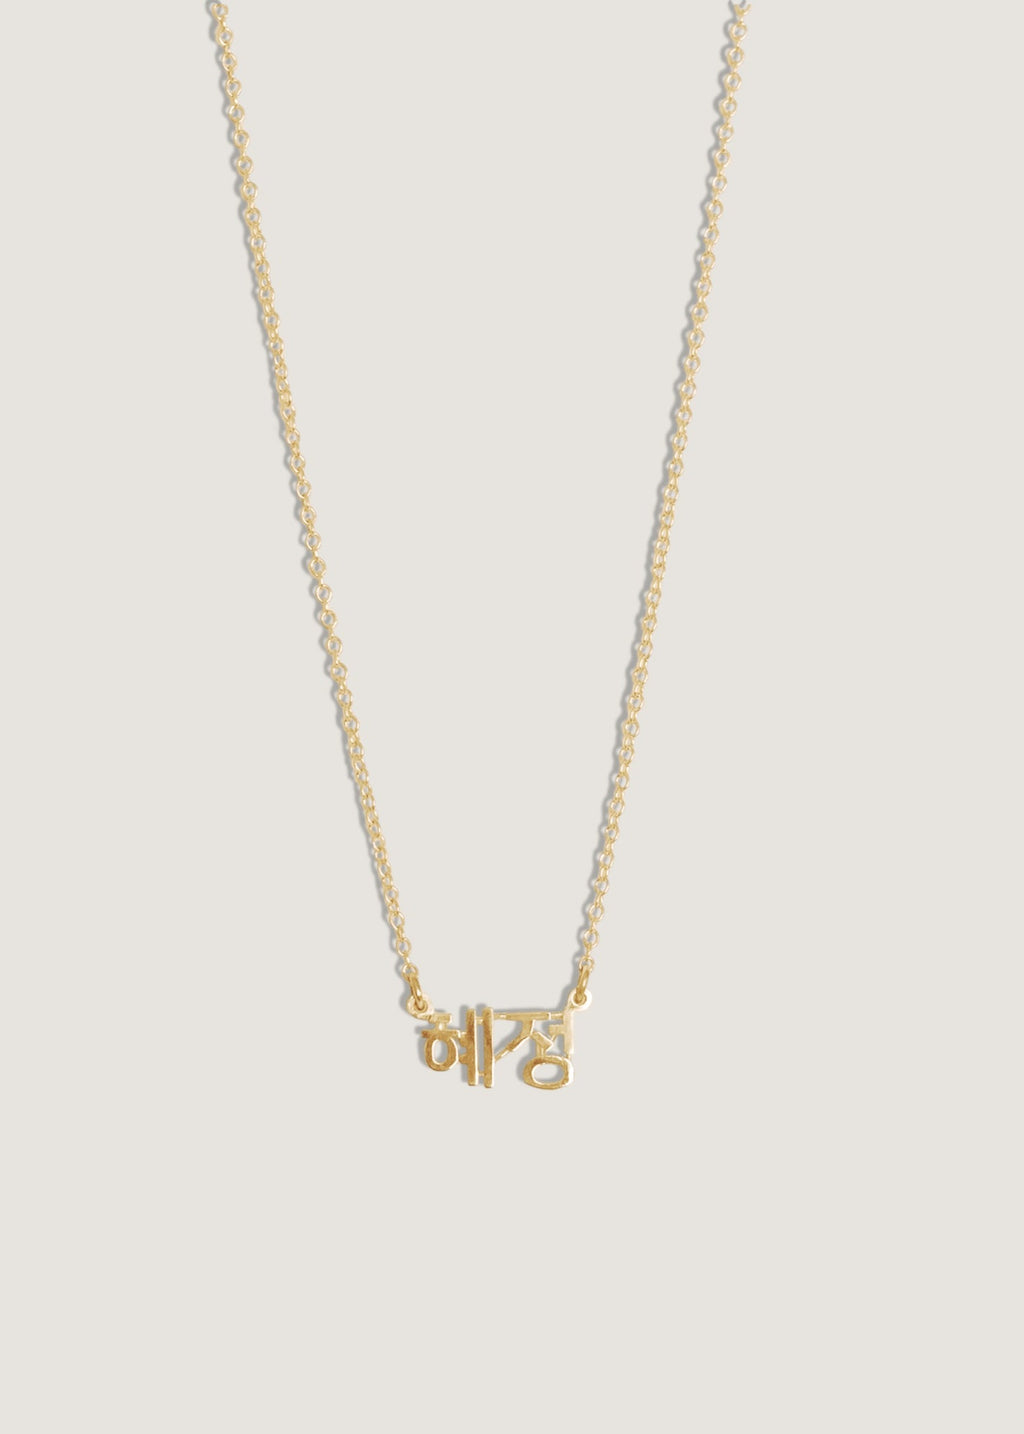 alt="Dear Kaia III Nameplate Necklace"